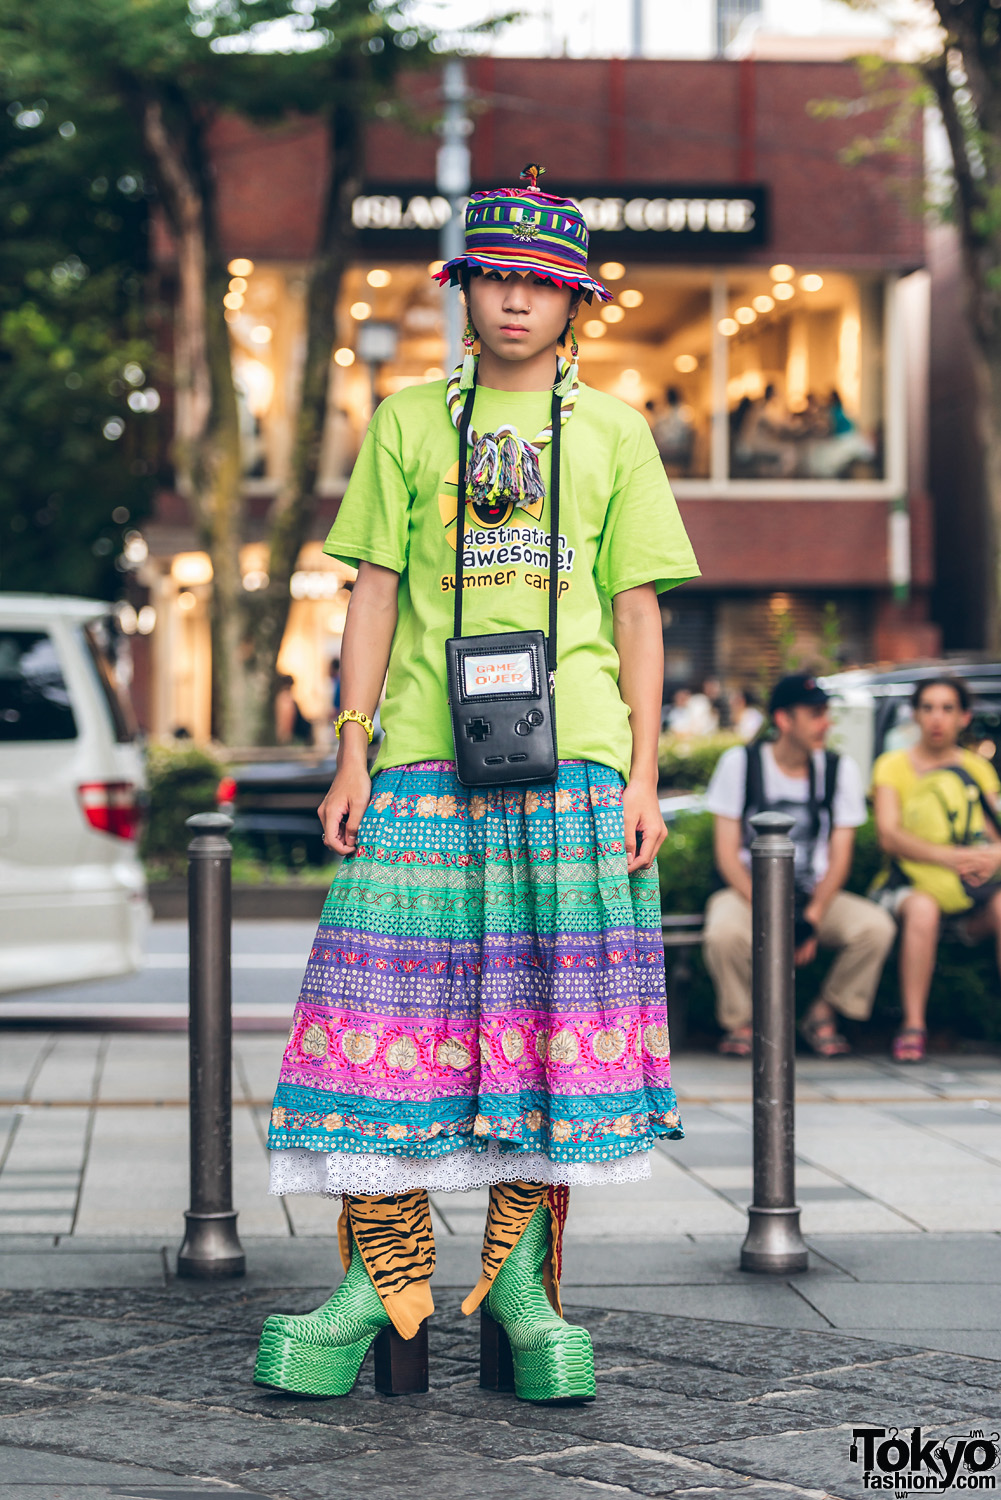 Harajuku Guy in Skirt Over Pants Vintage Fashion w/ Jeremy Scott & Kinji